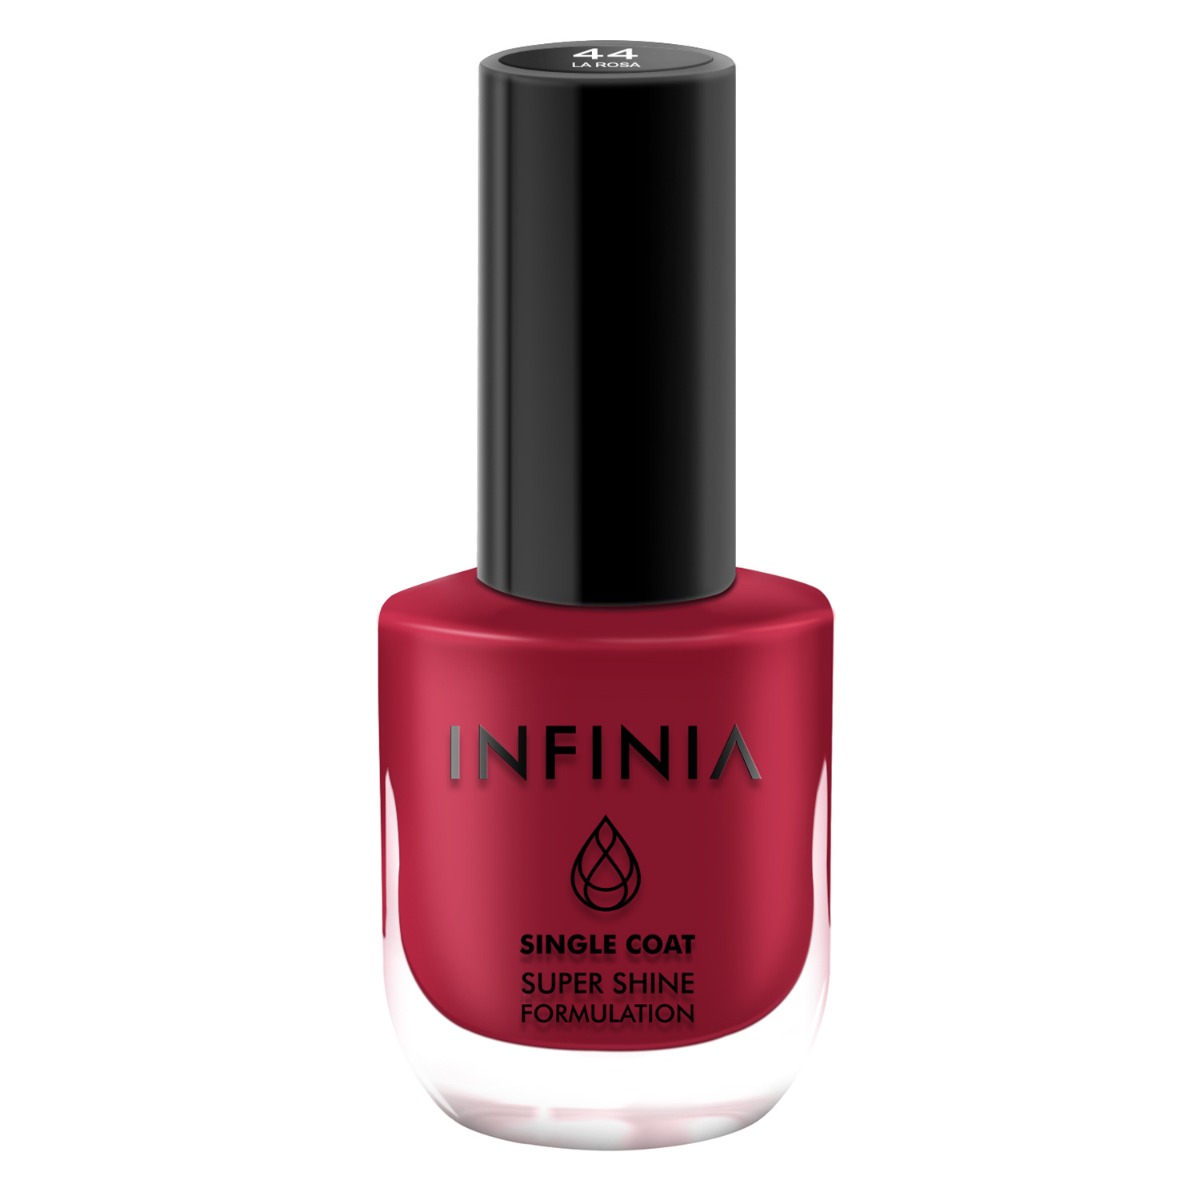 INFINIA Single Coat Super Shine Nail Polish With Ultra High Gloss, 12ml-044 La Rosa